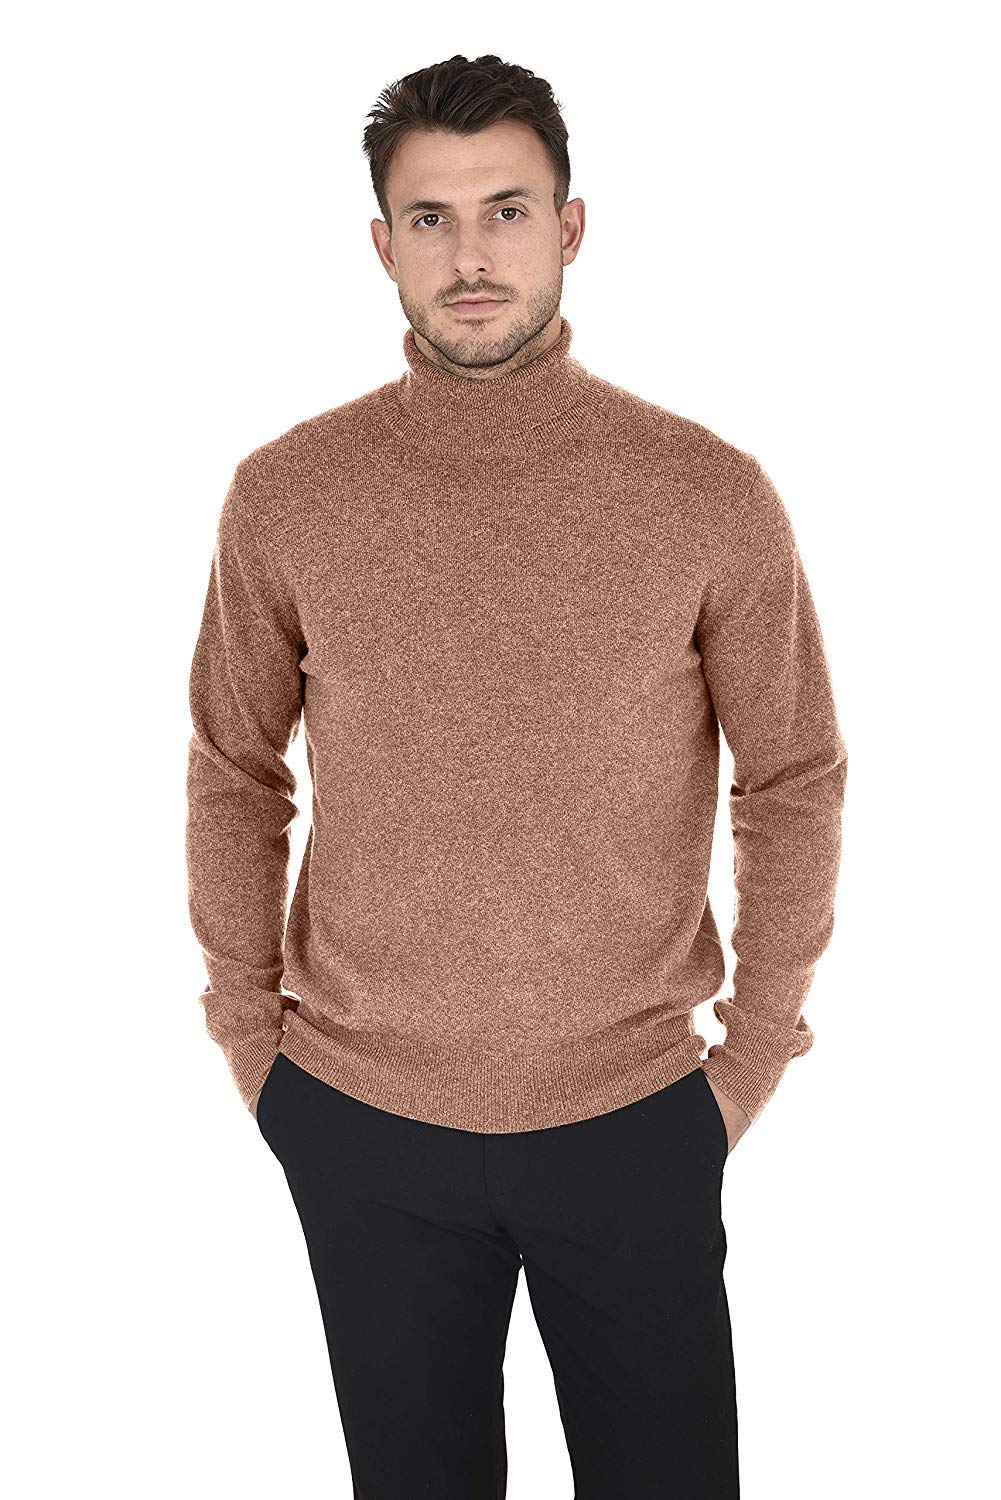 Shephe 4 Ply Mens V Neck Cashmere Sweater